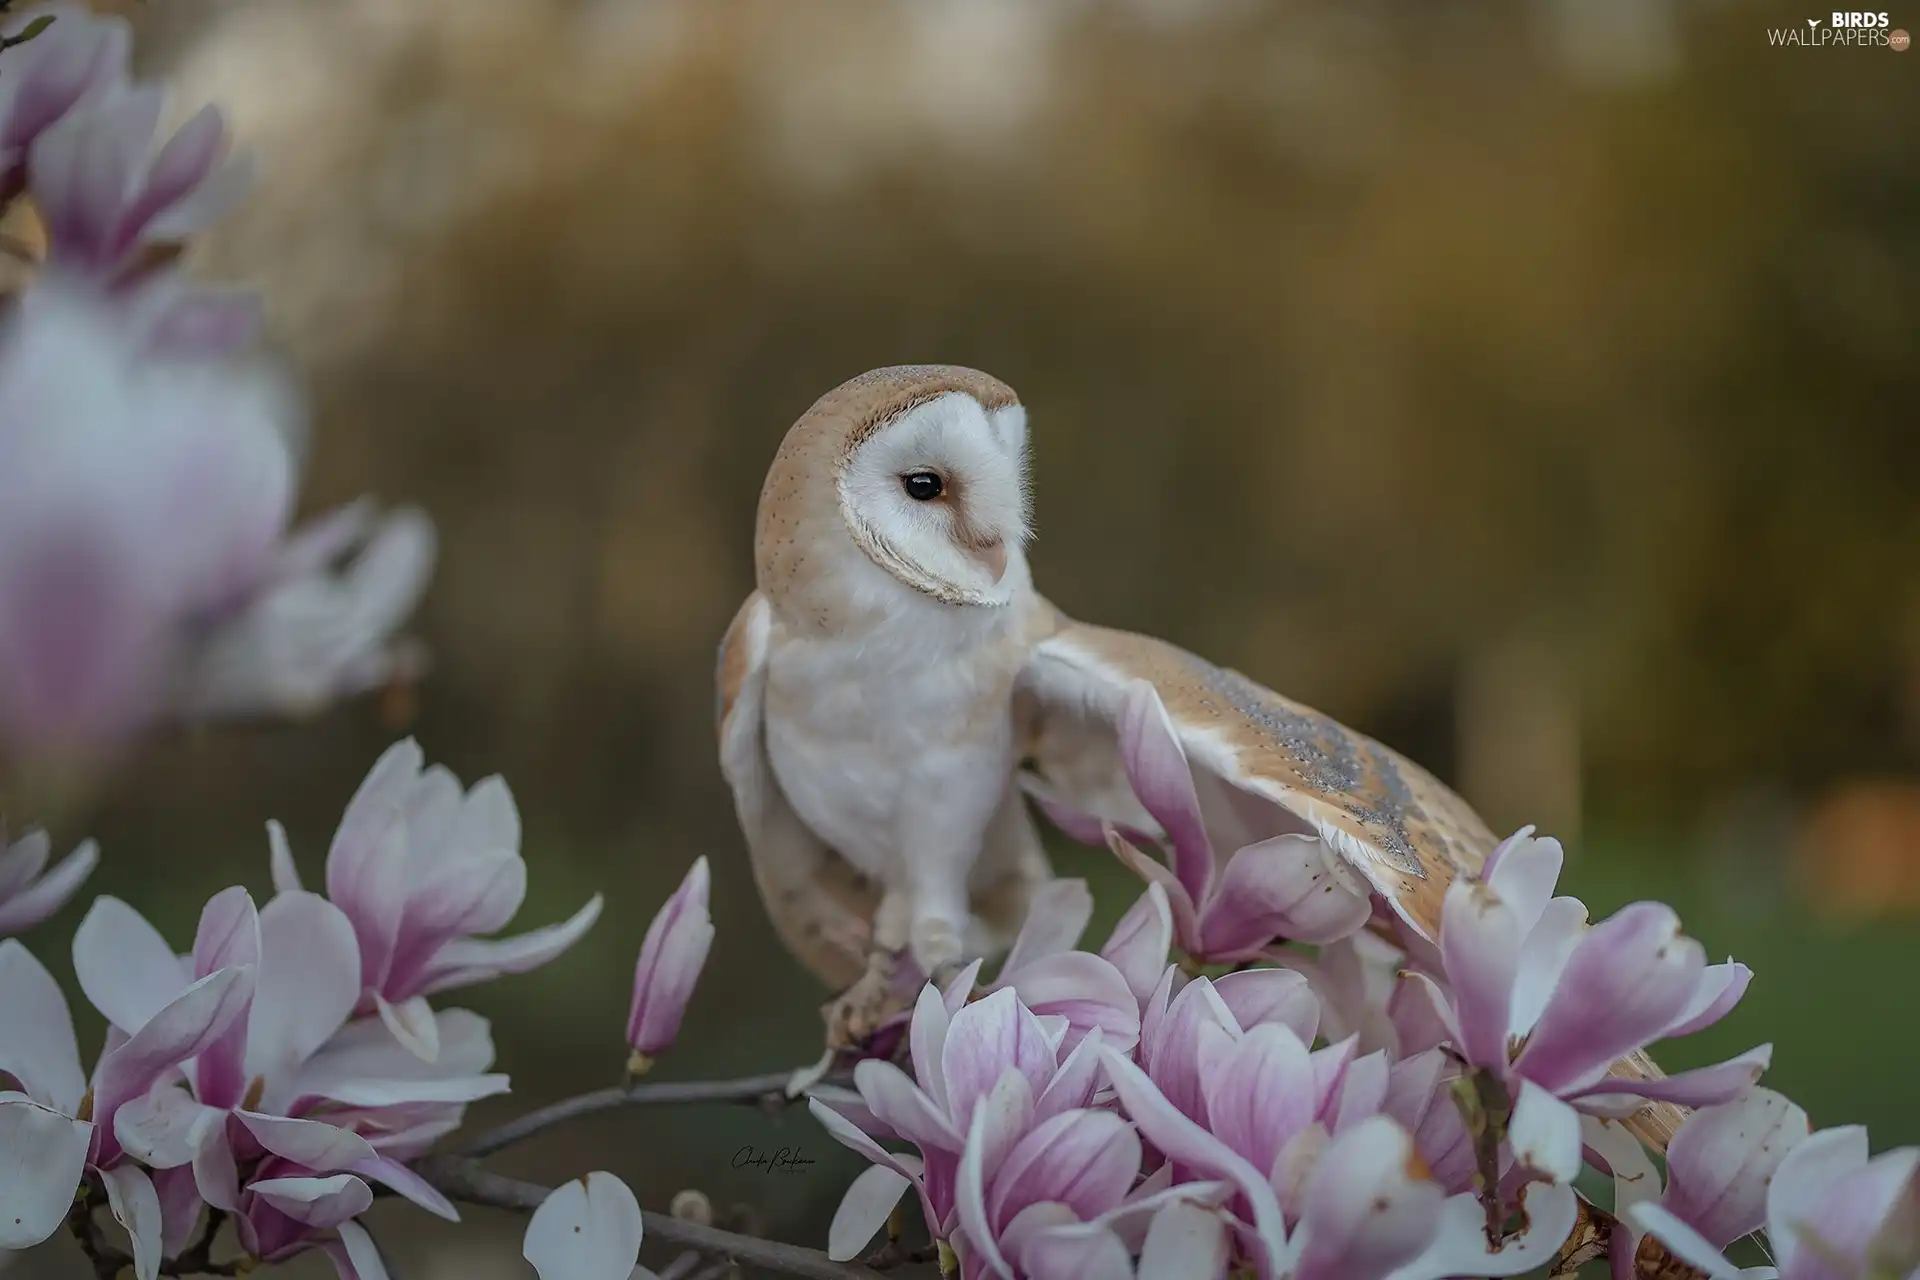 Magnolia, blurry background, Barn, branch, owl